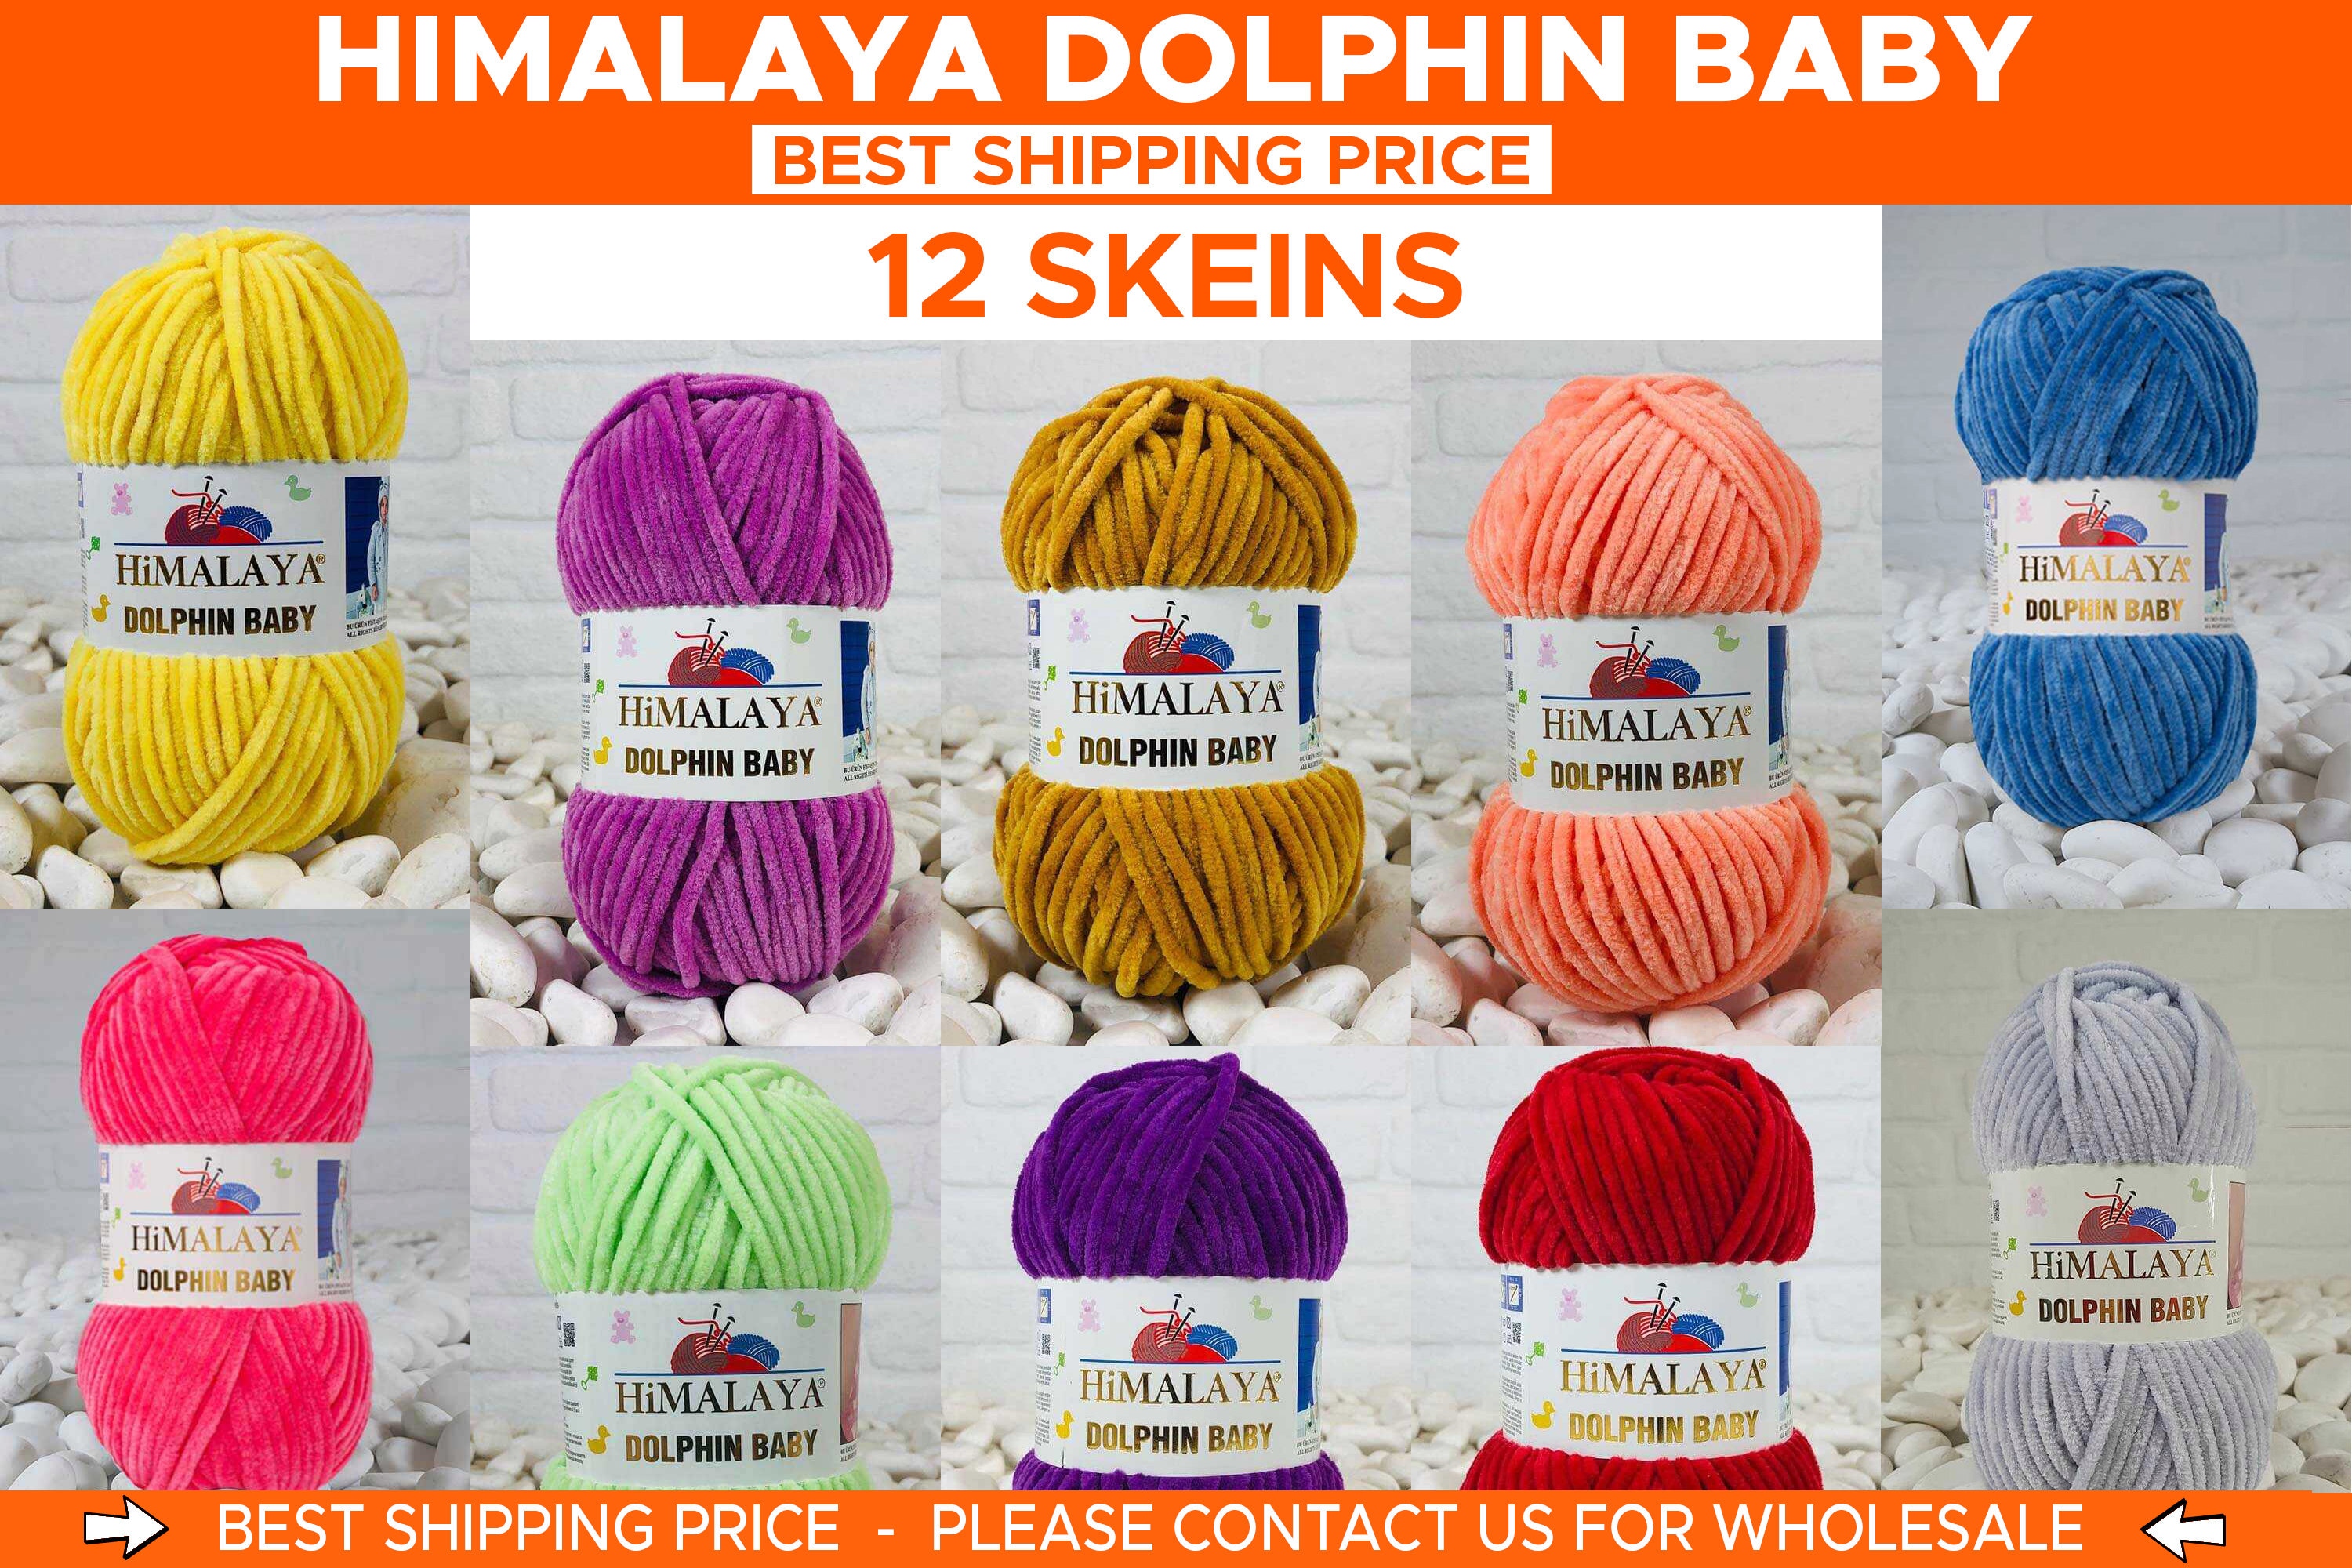 2 Skeins !!! Himalaya Dolphin Baby - Knitting - Yarn - Wool (choose colors  tex)